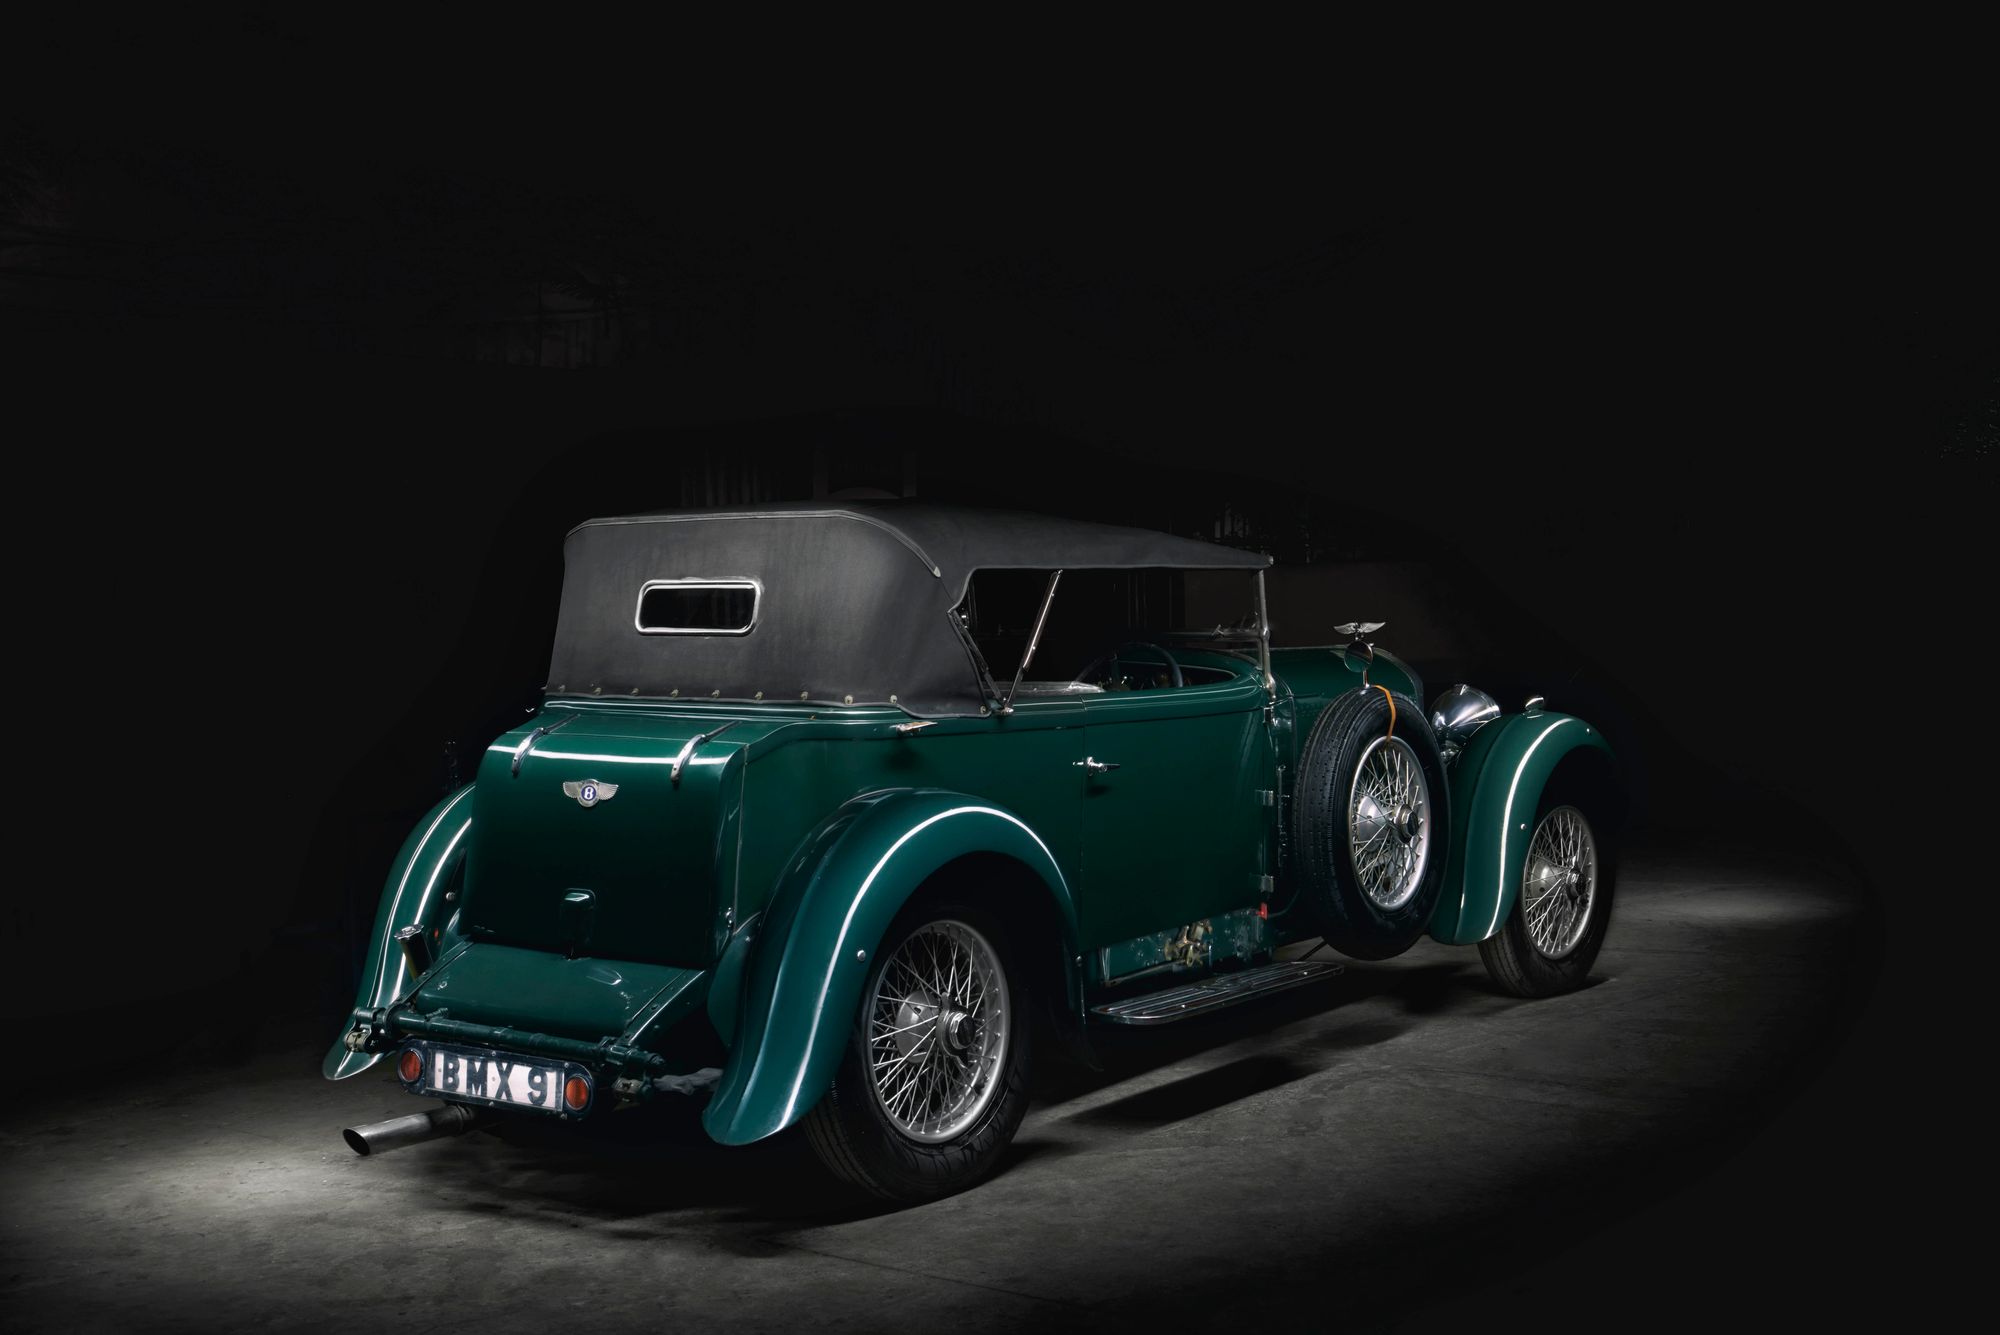 1930 Bentley 8 Litre classic cars heritage cars vintage cars Mumbai